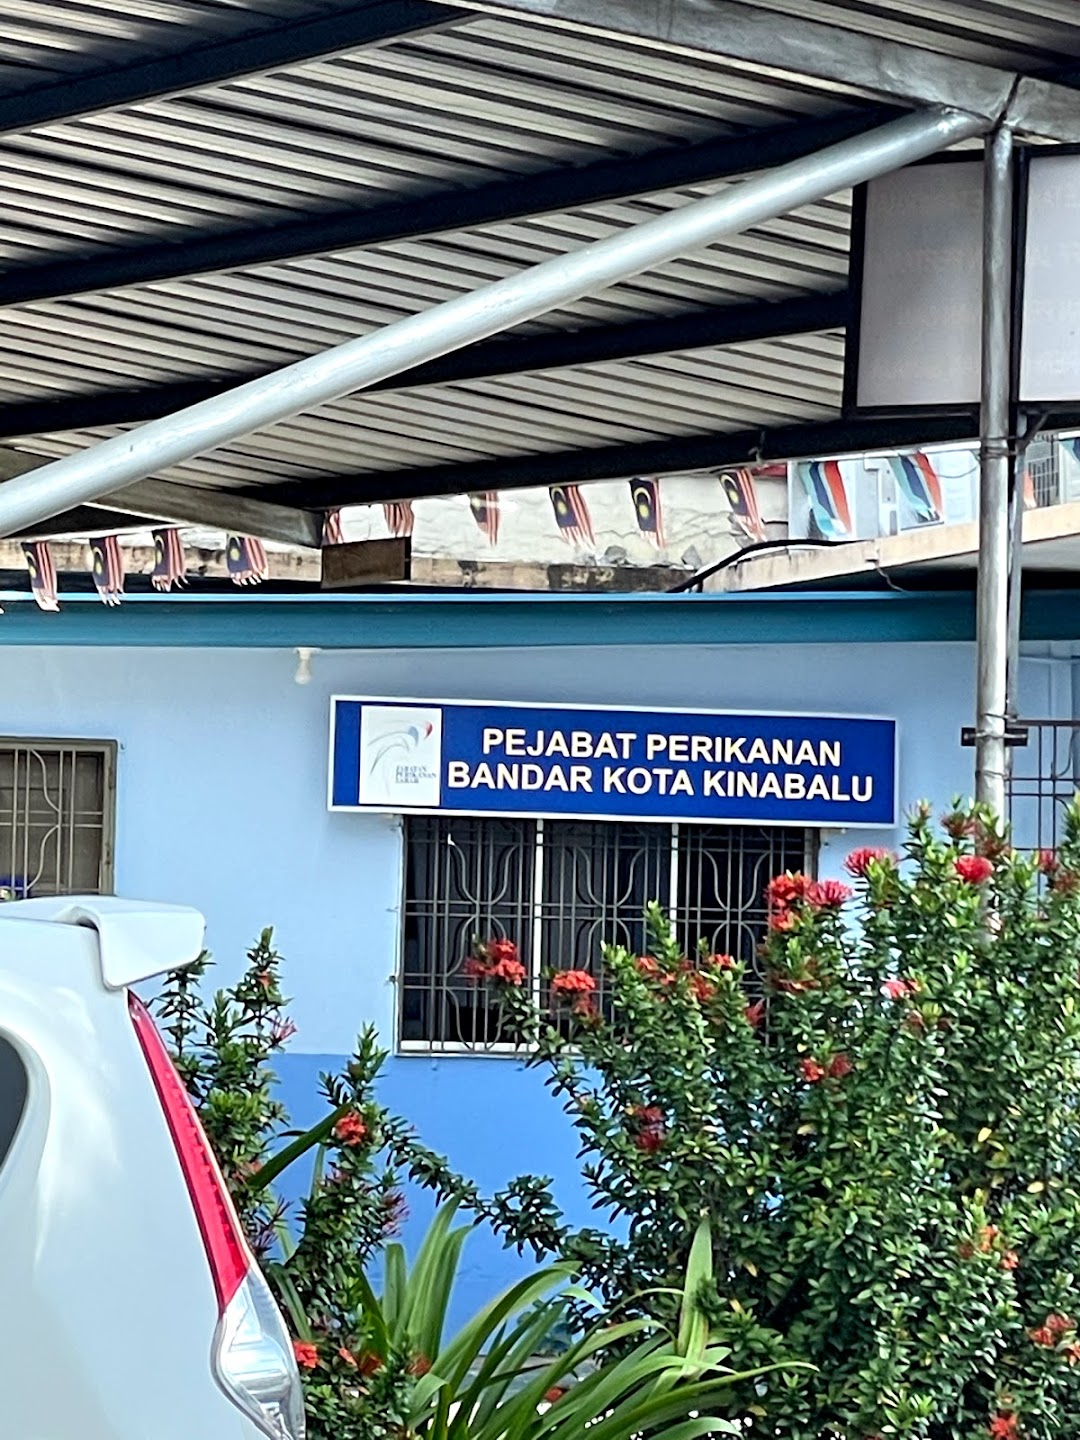 Pejabat Perikanan Bandar Kota Kinabalu